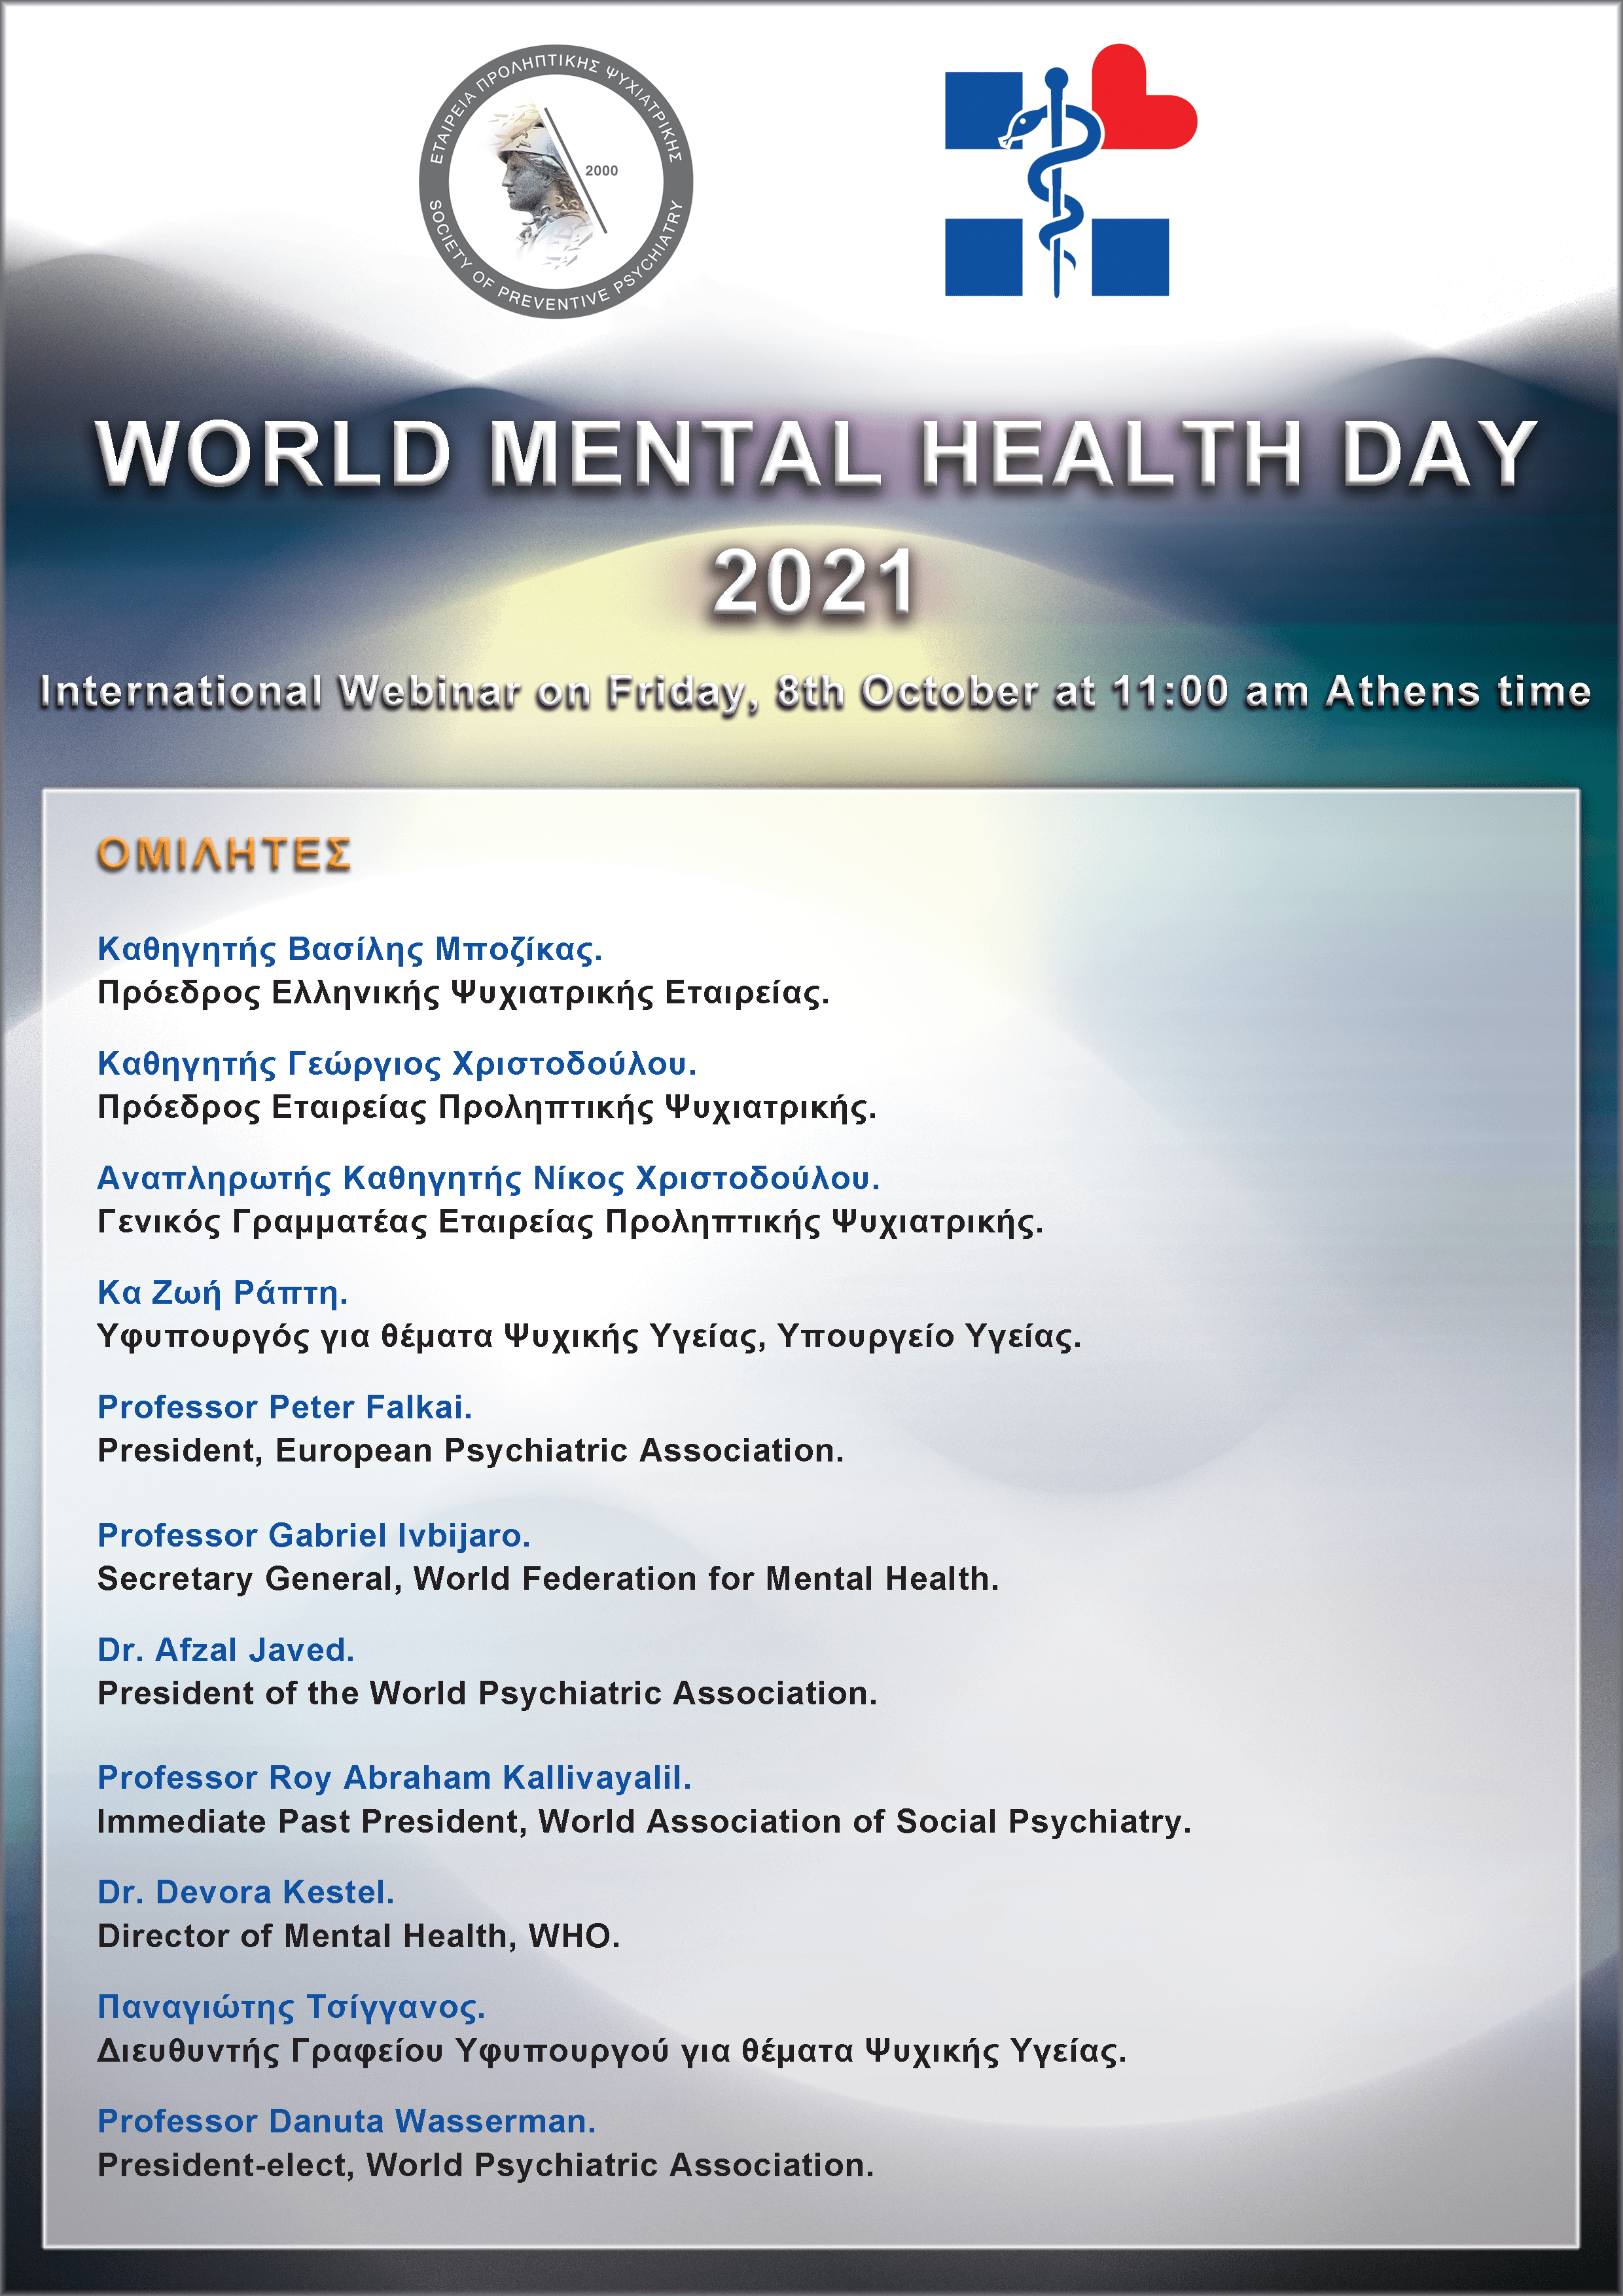 WORLD MENTAL HEALTH DAY 2021 - Ομιλητές.